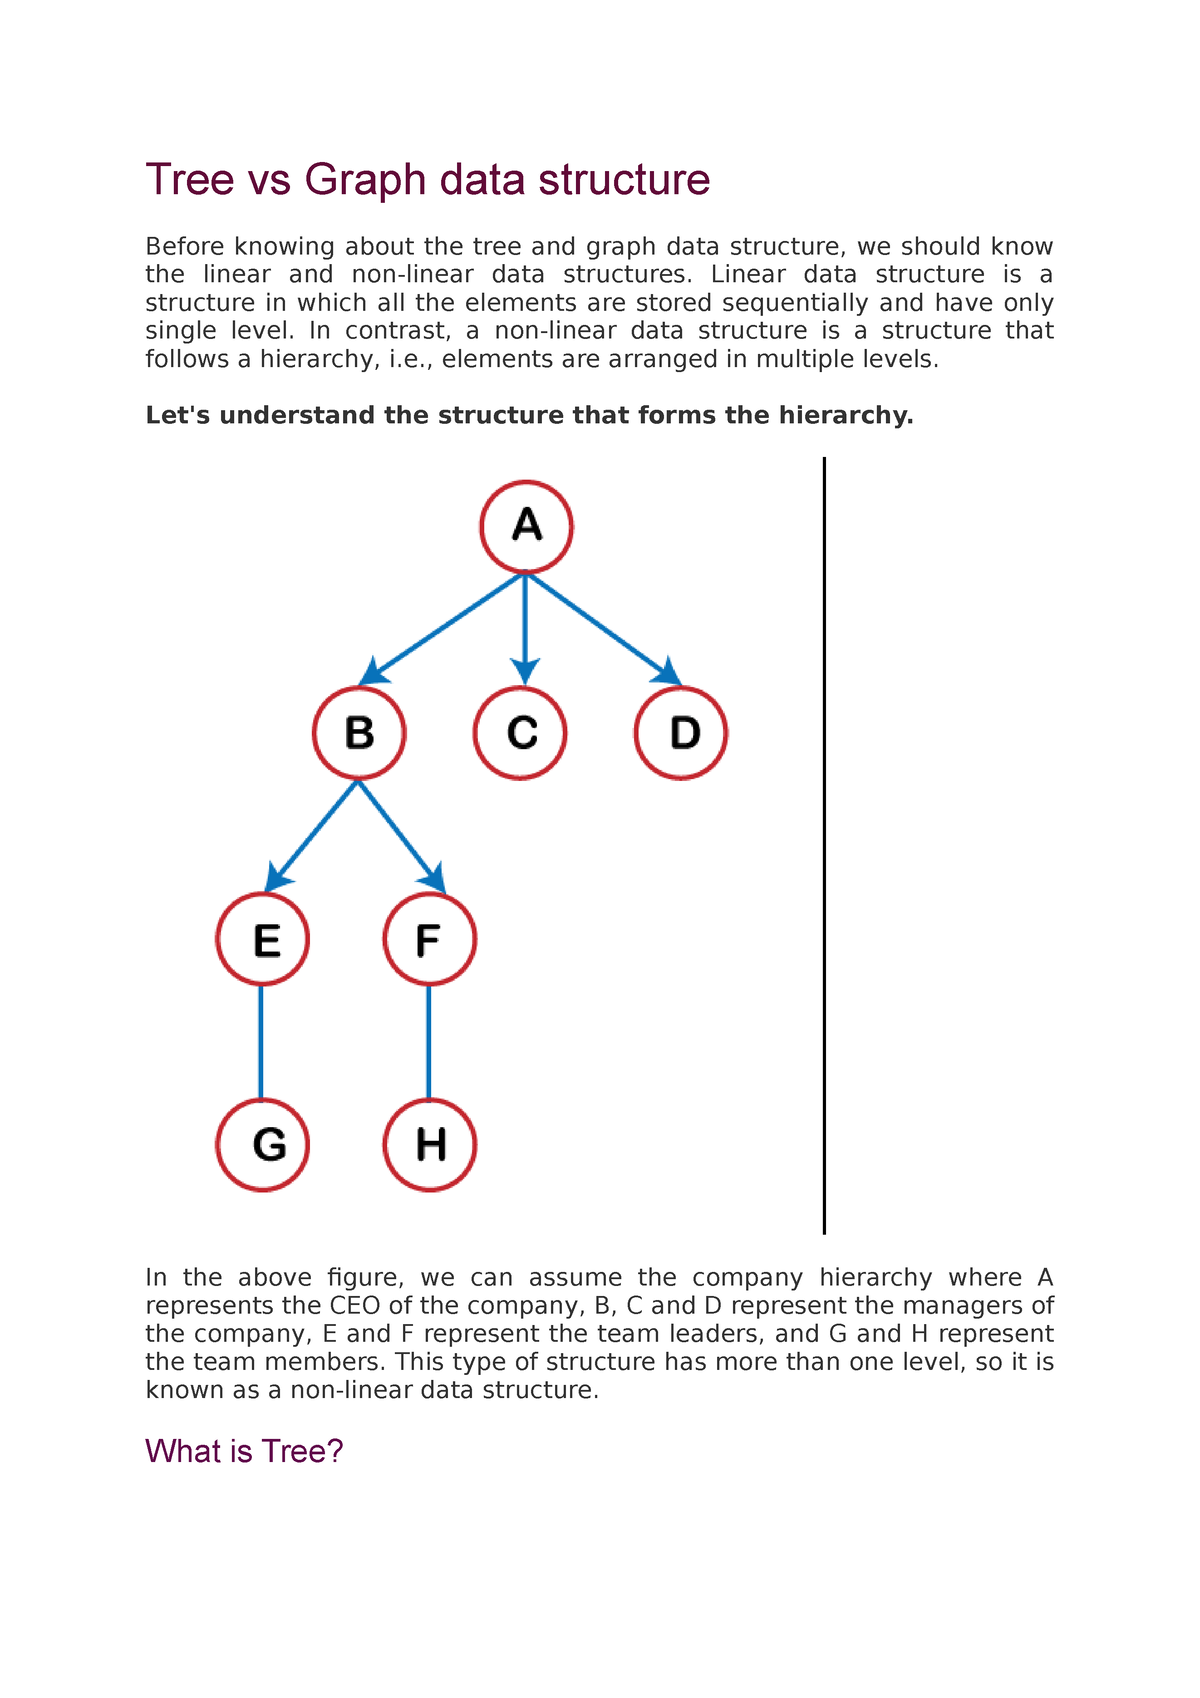 Tree vs Graph data structure - Tree vs Graph data structure Before ...